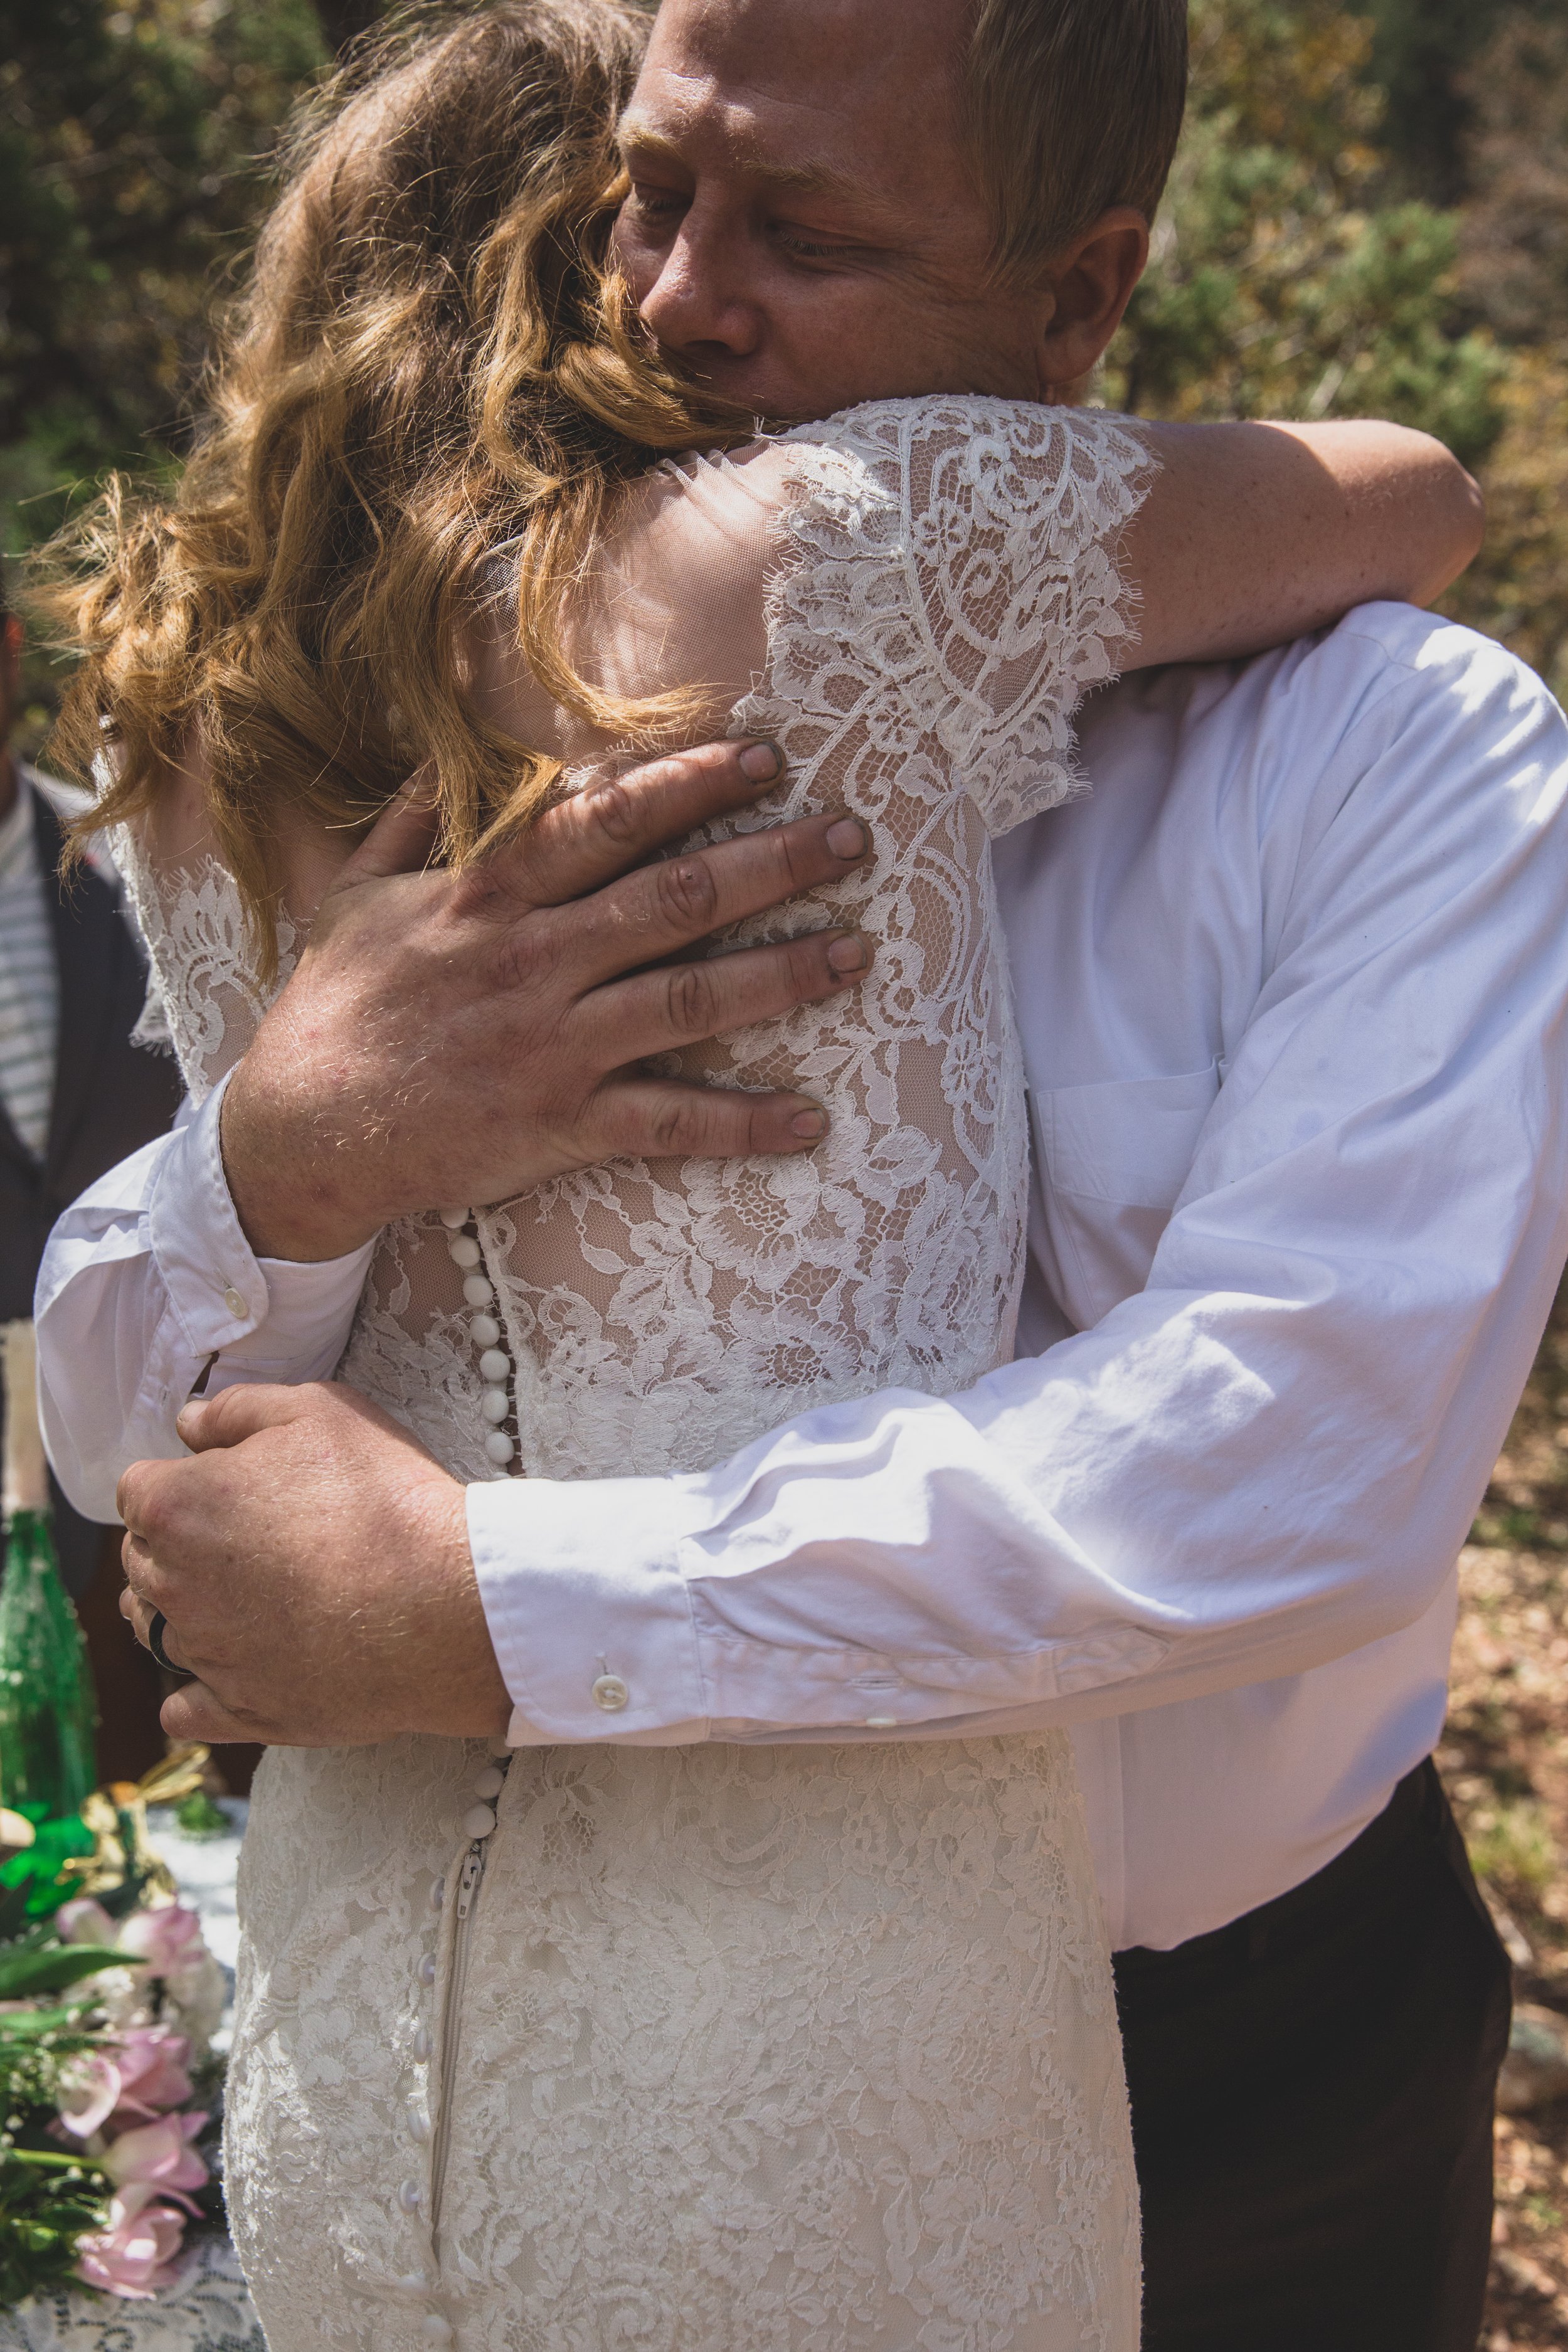 Newlyweds on their wedding day at their high noon desert elopement in Payson, Arizona by Arizona Elopement Photographer Jennifer Lind Schutsky.